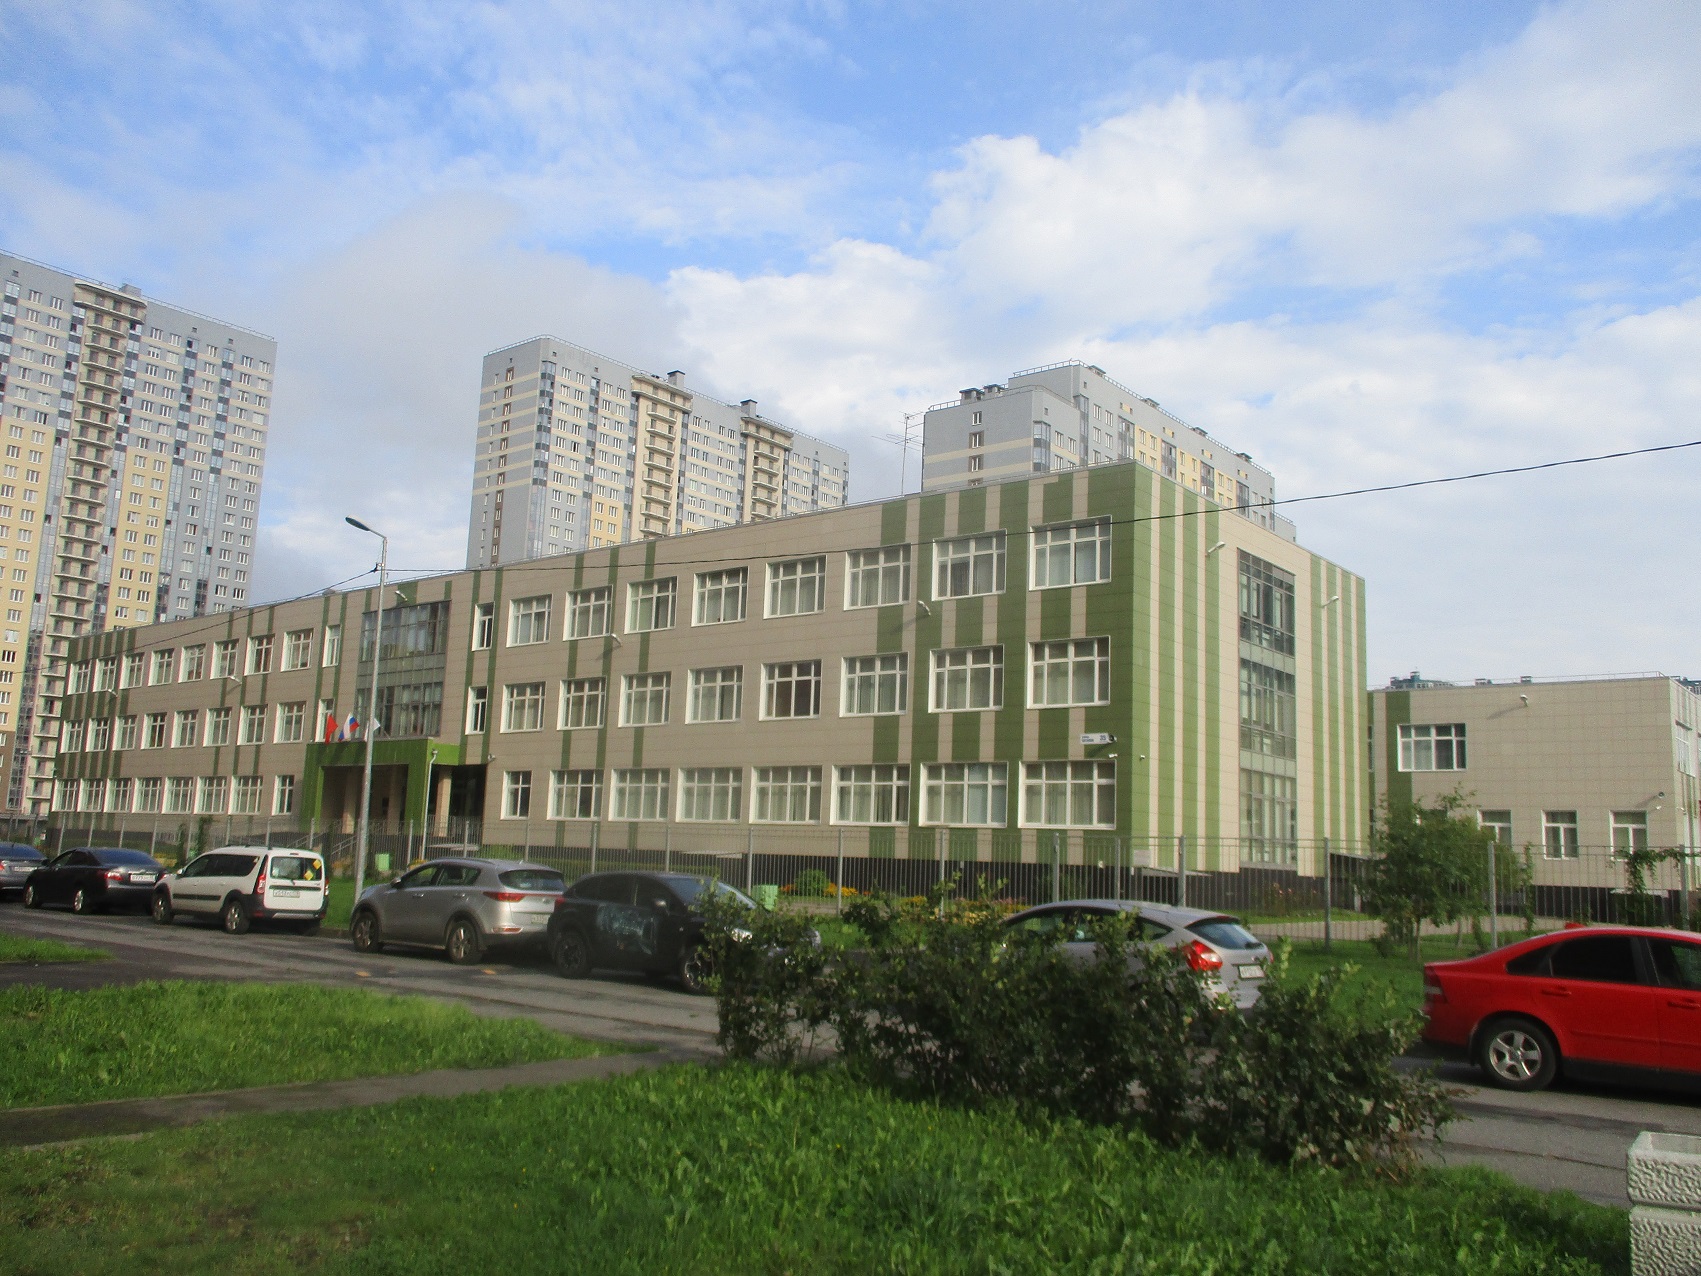 школа 630 приморского района санкт петербурга